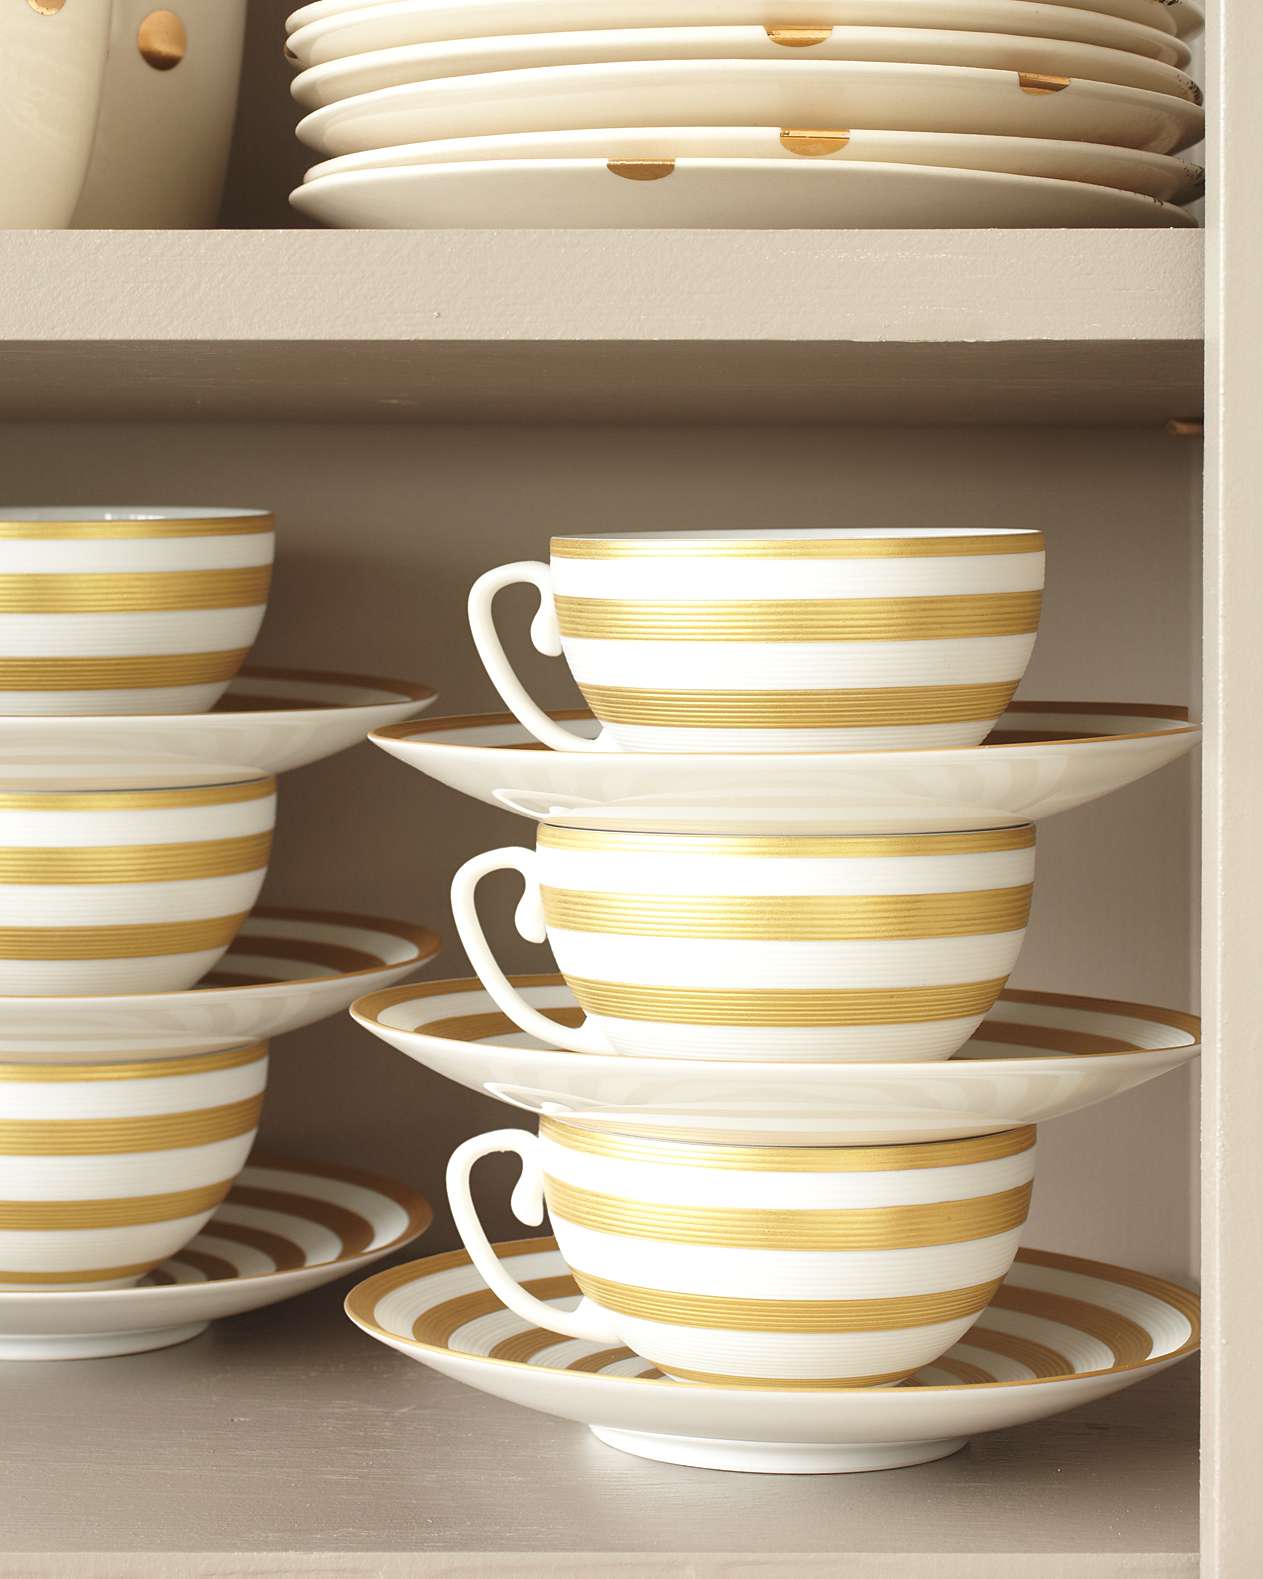 organized-teacups-saucer-0911mld107506.jpg